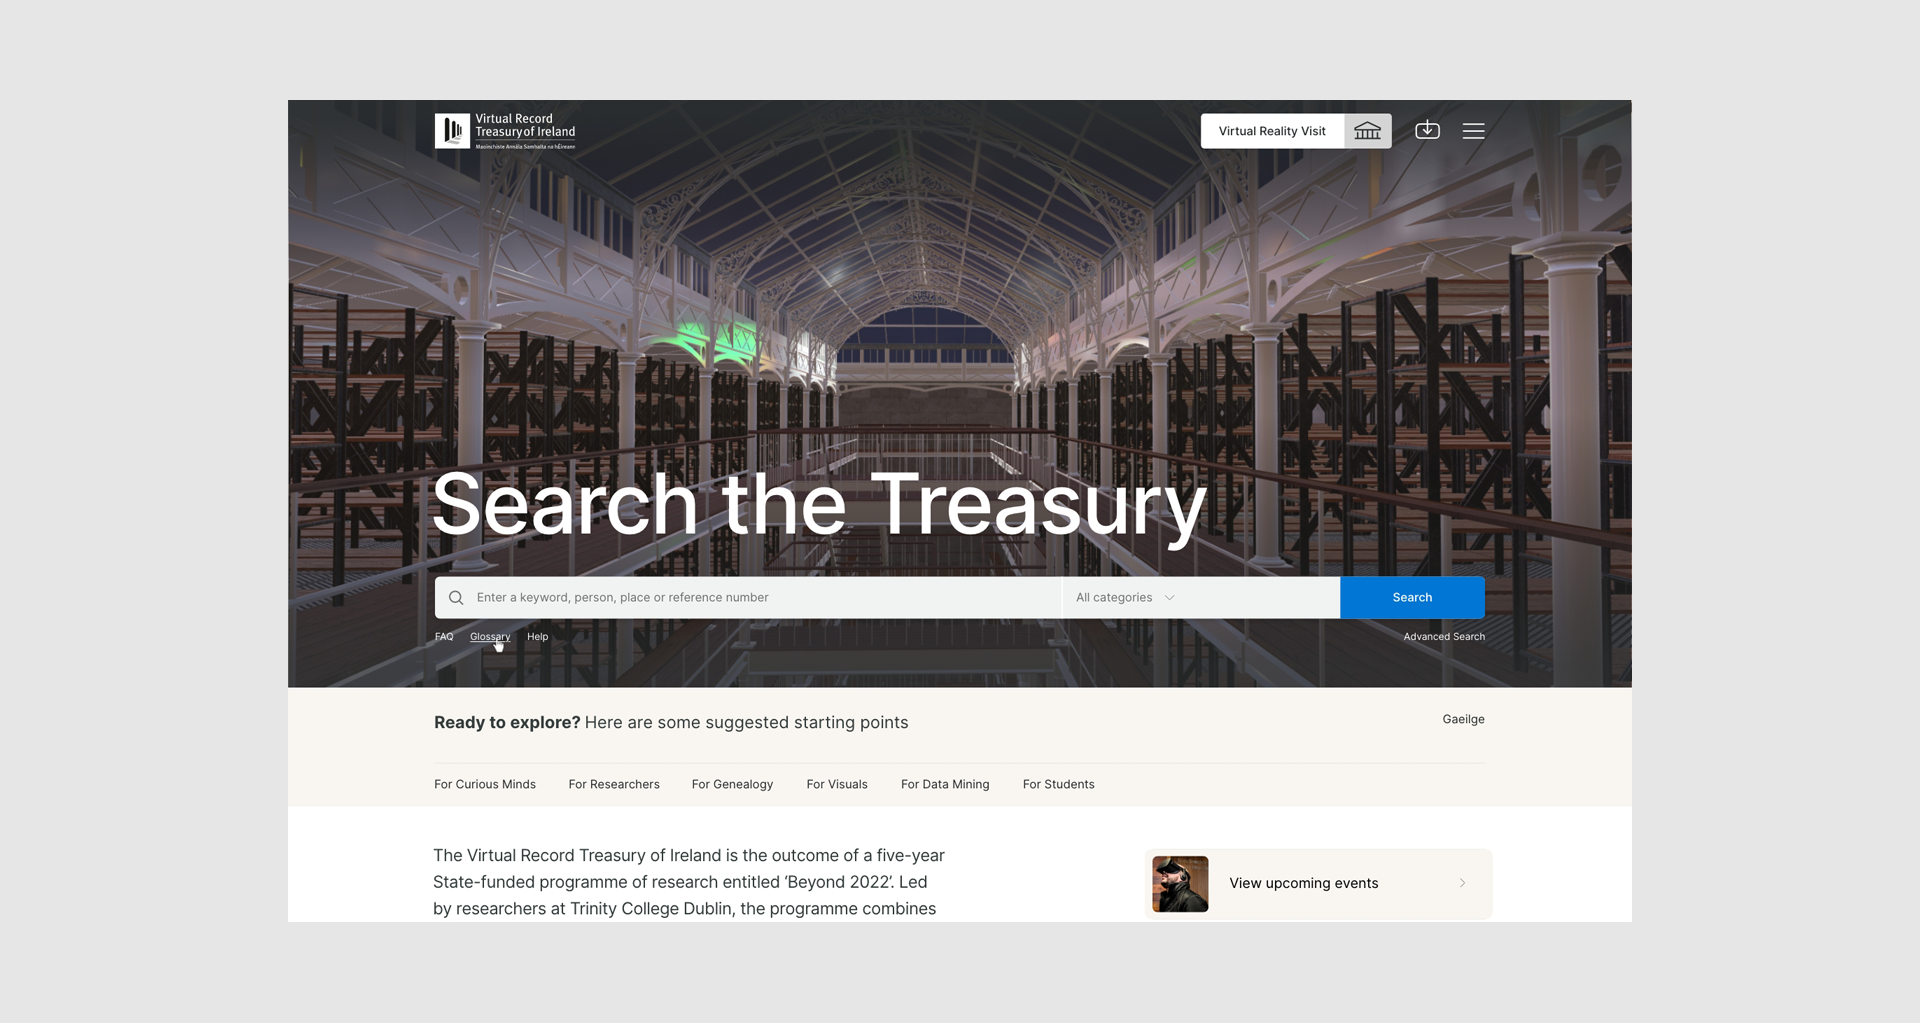 Cover image: The Virtual Record Treasury of Ireland